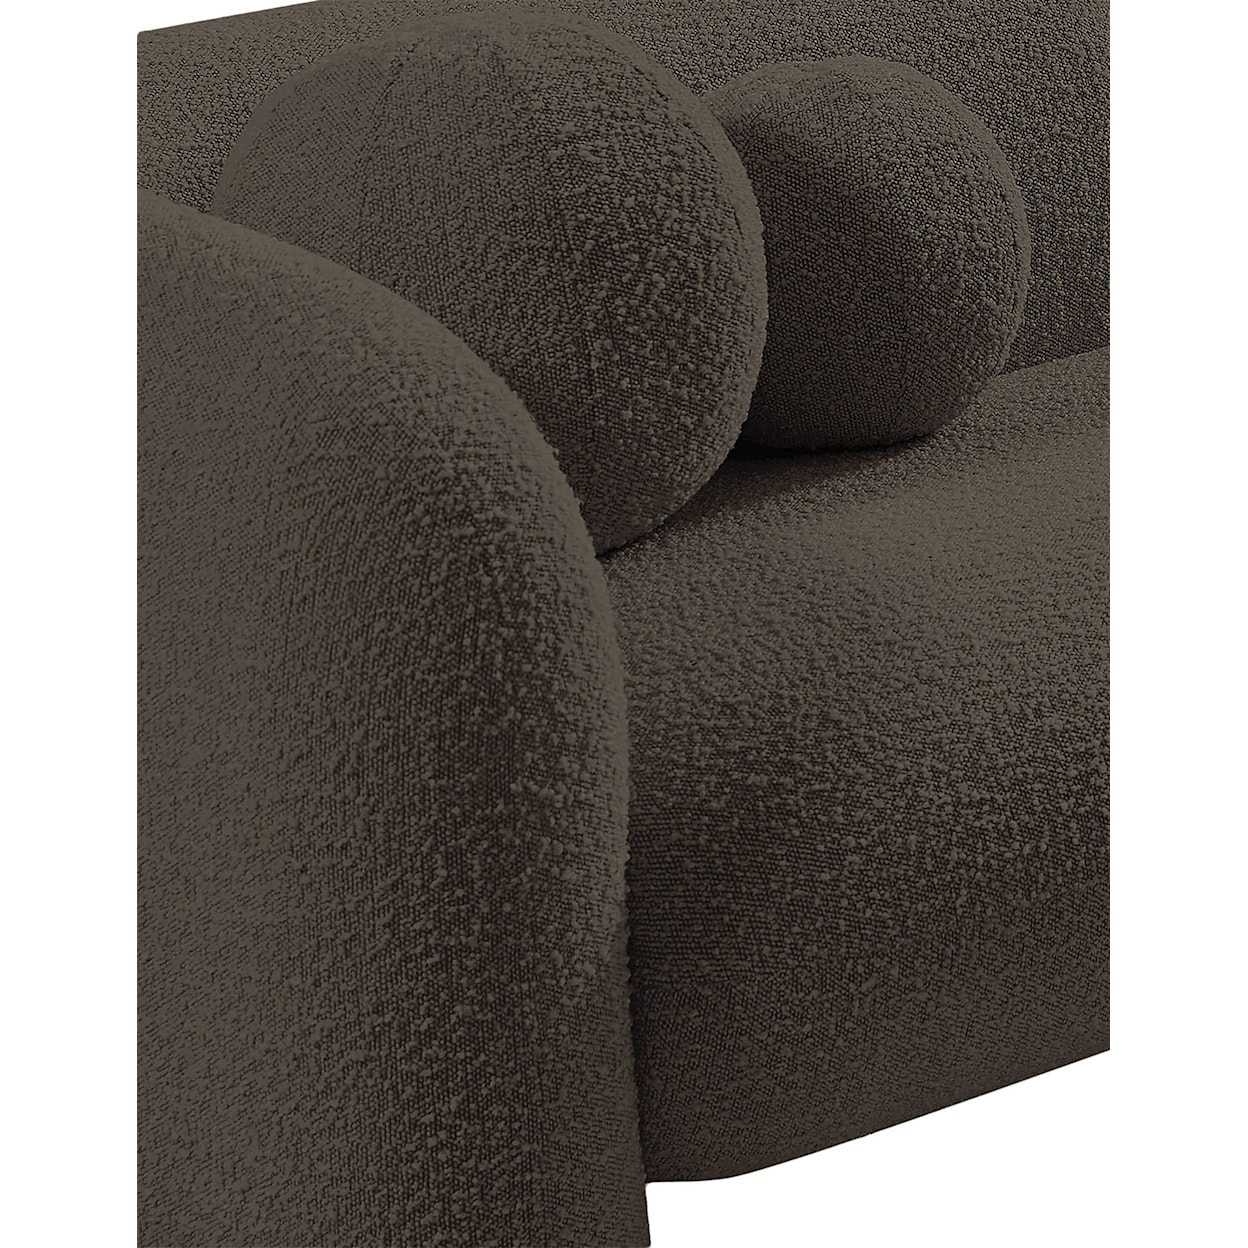 Meridian Furniture Emory Chair